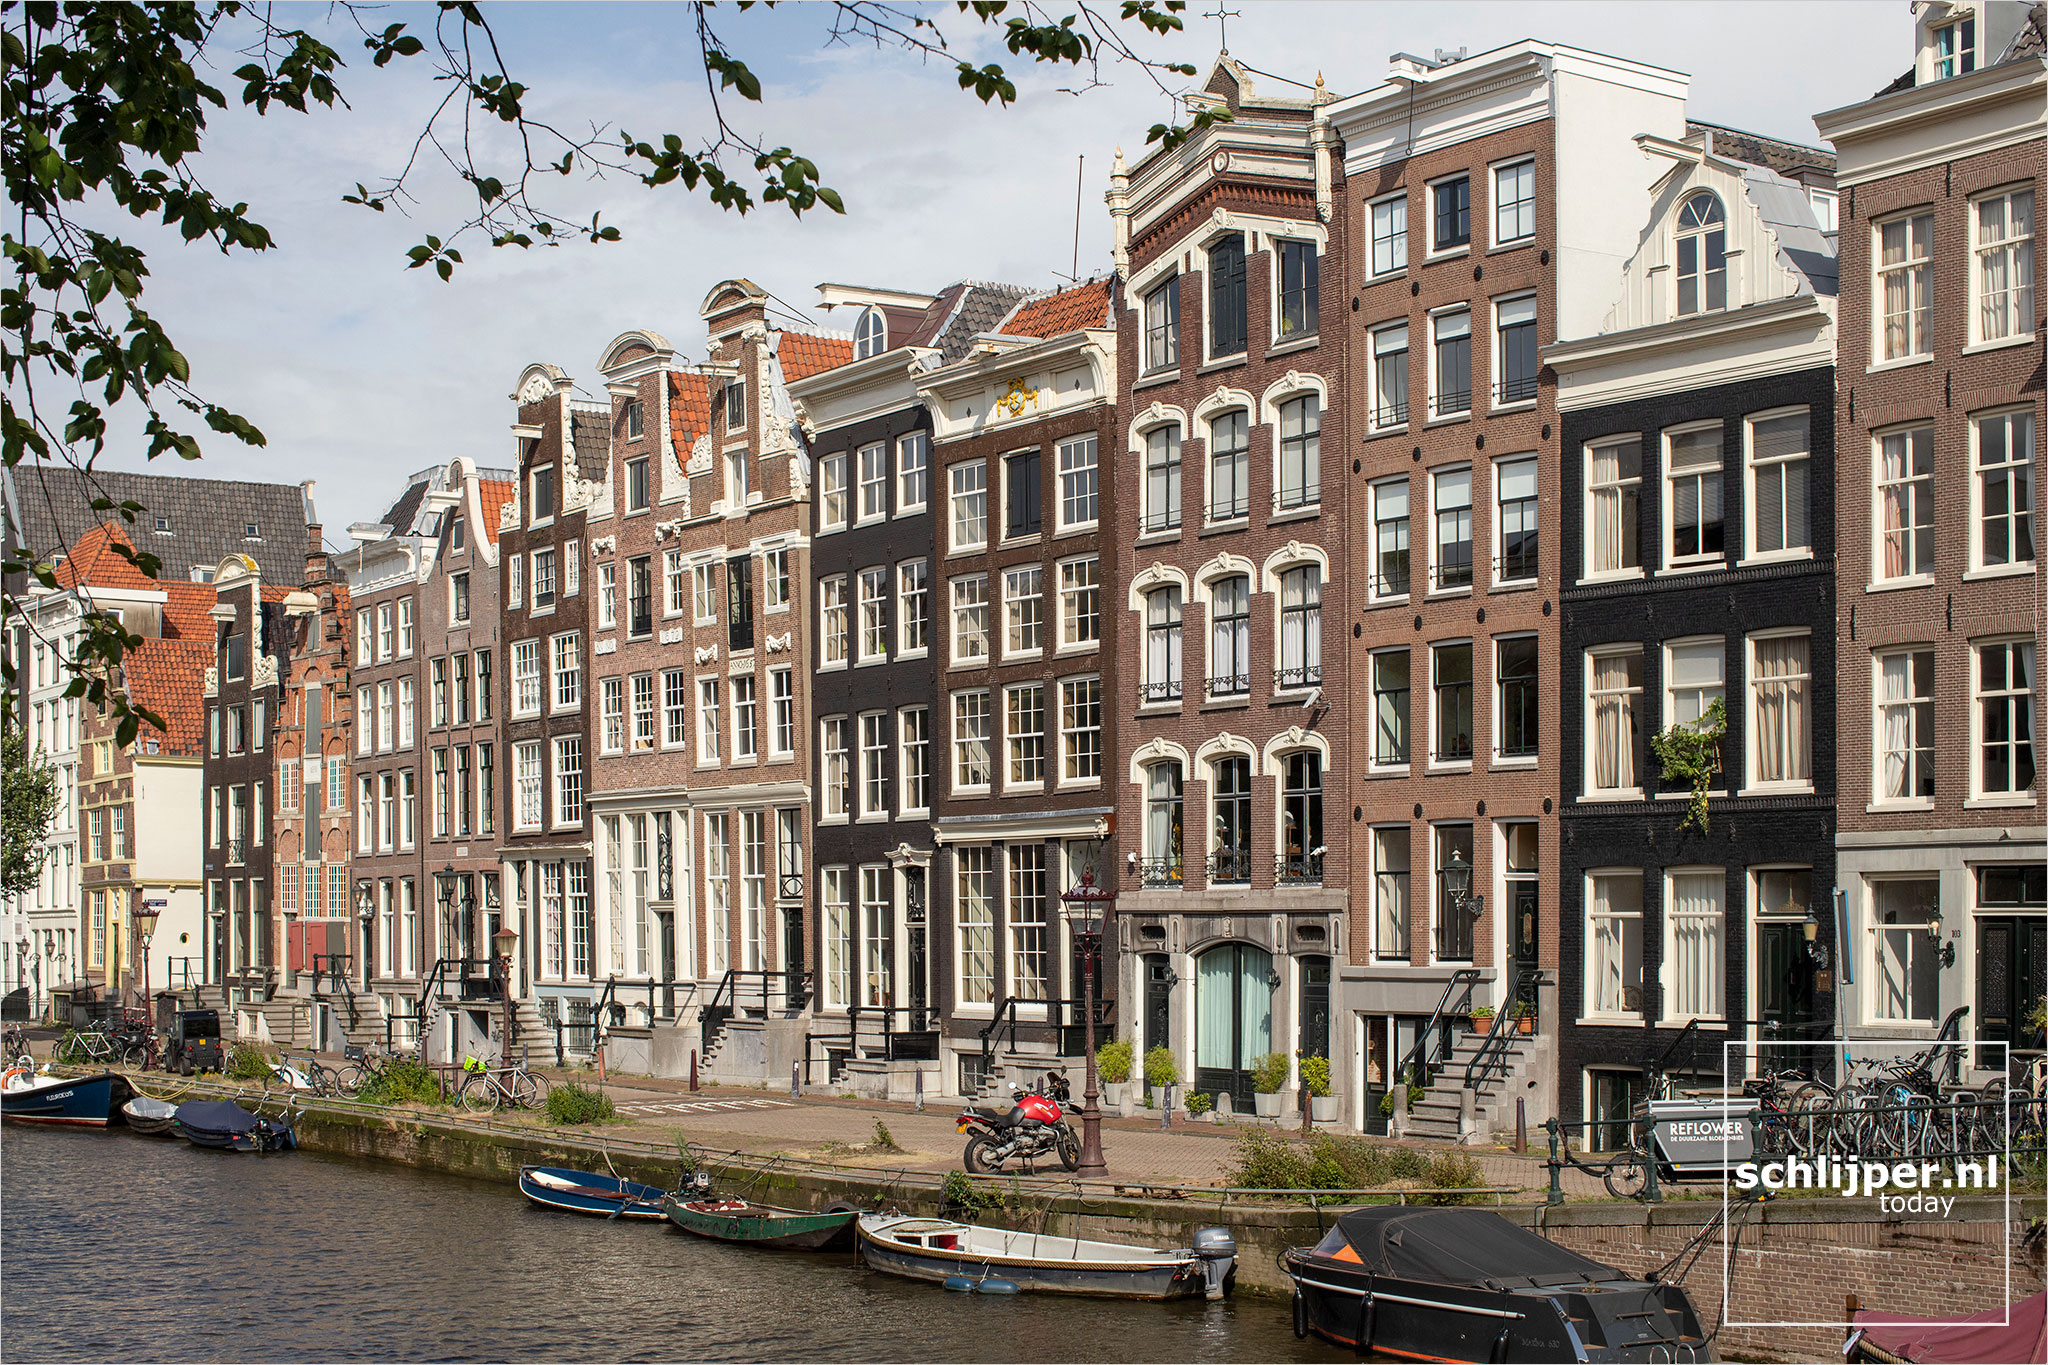 The Netherlands, Amsterdam, 10 augustus 2021